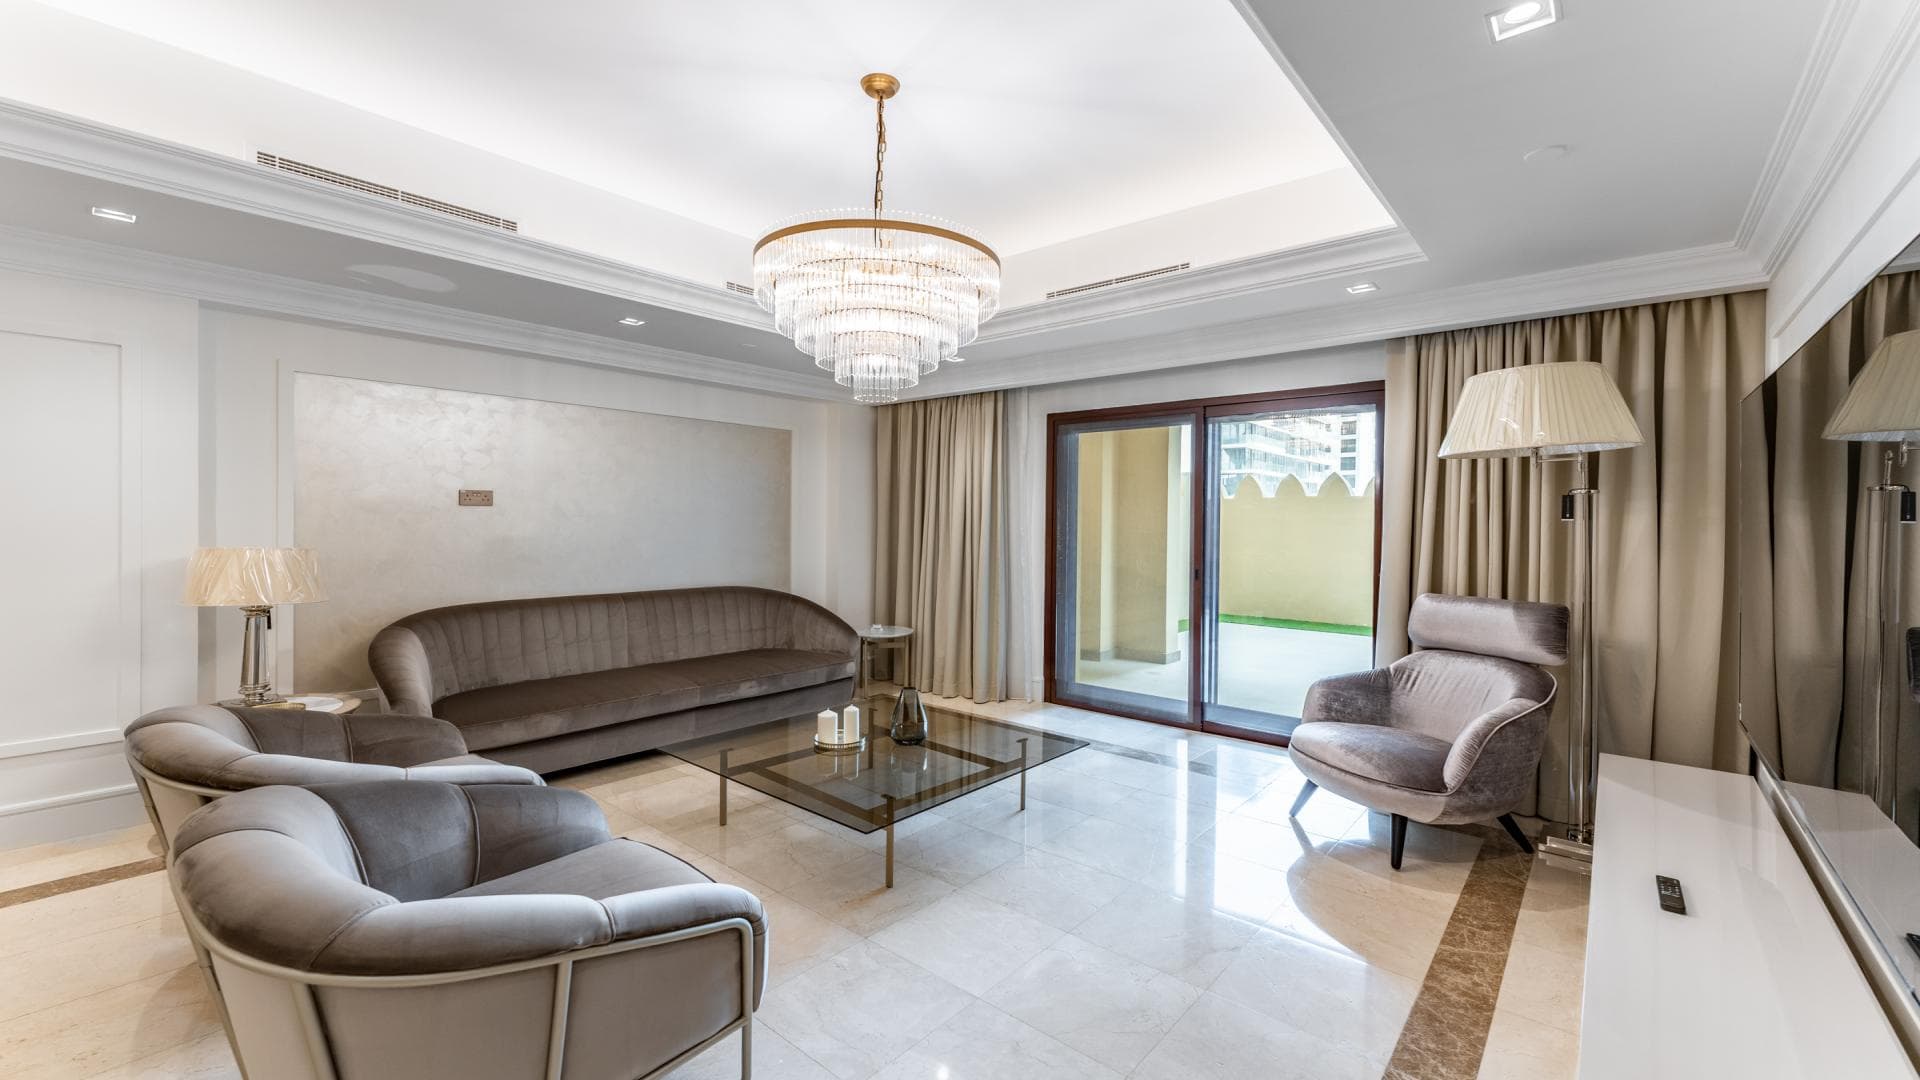 3 Bedroom Apartment For Sale Al Ramth 33 Lp38744 12653b8c1c92600.jpg